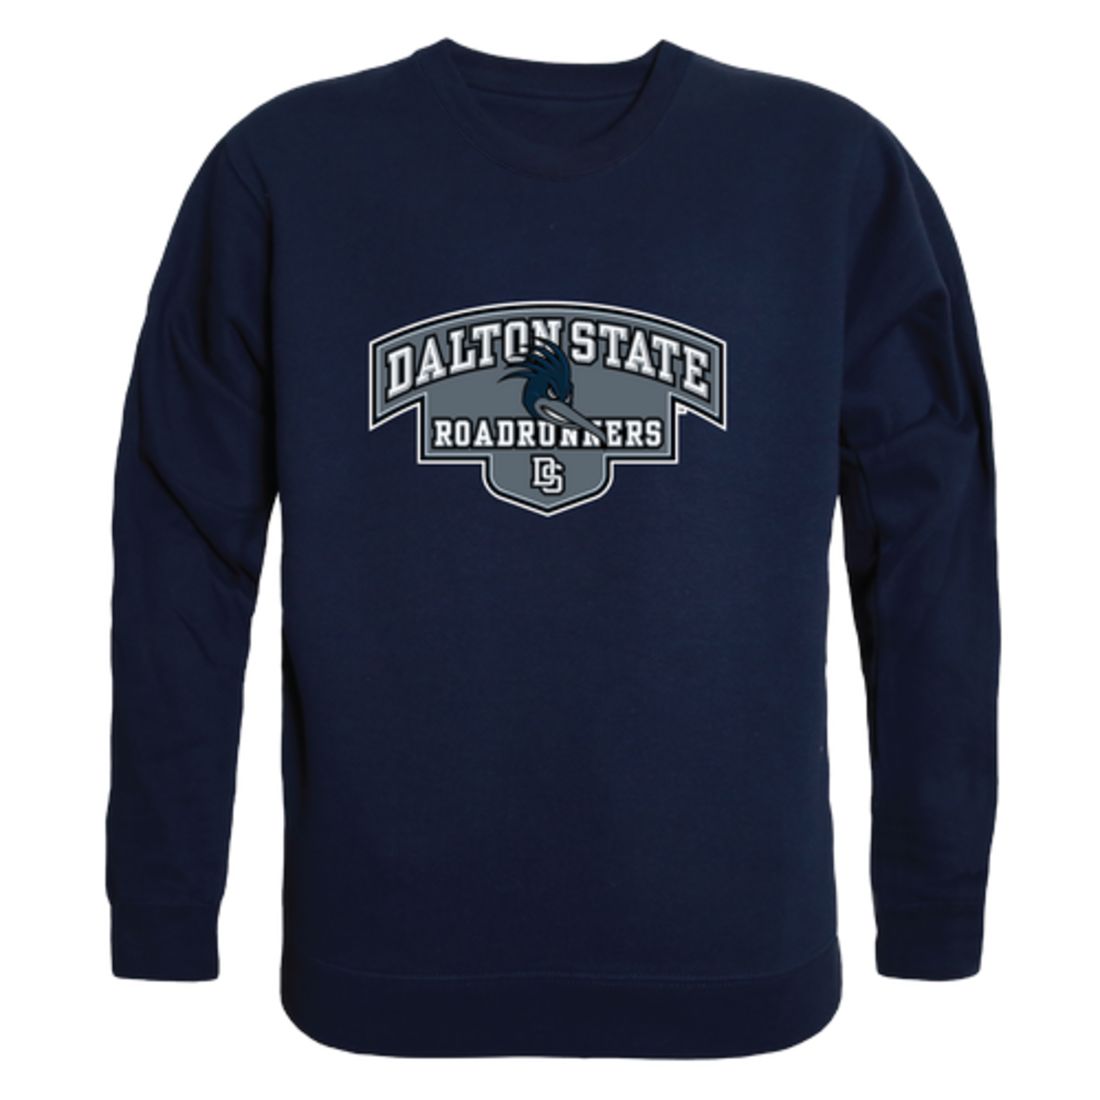 Dalton-State-College-Roadrunners-Collegiate-Fleece-Crewneck-Pullover-Sweatshirt